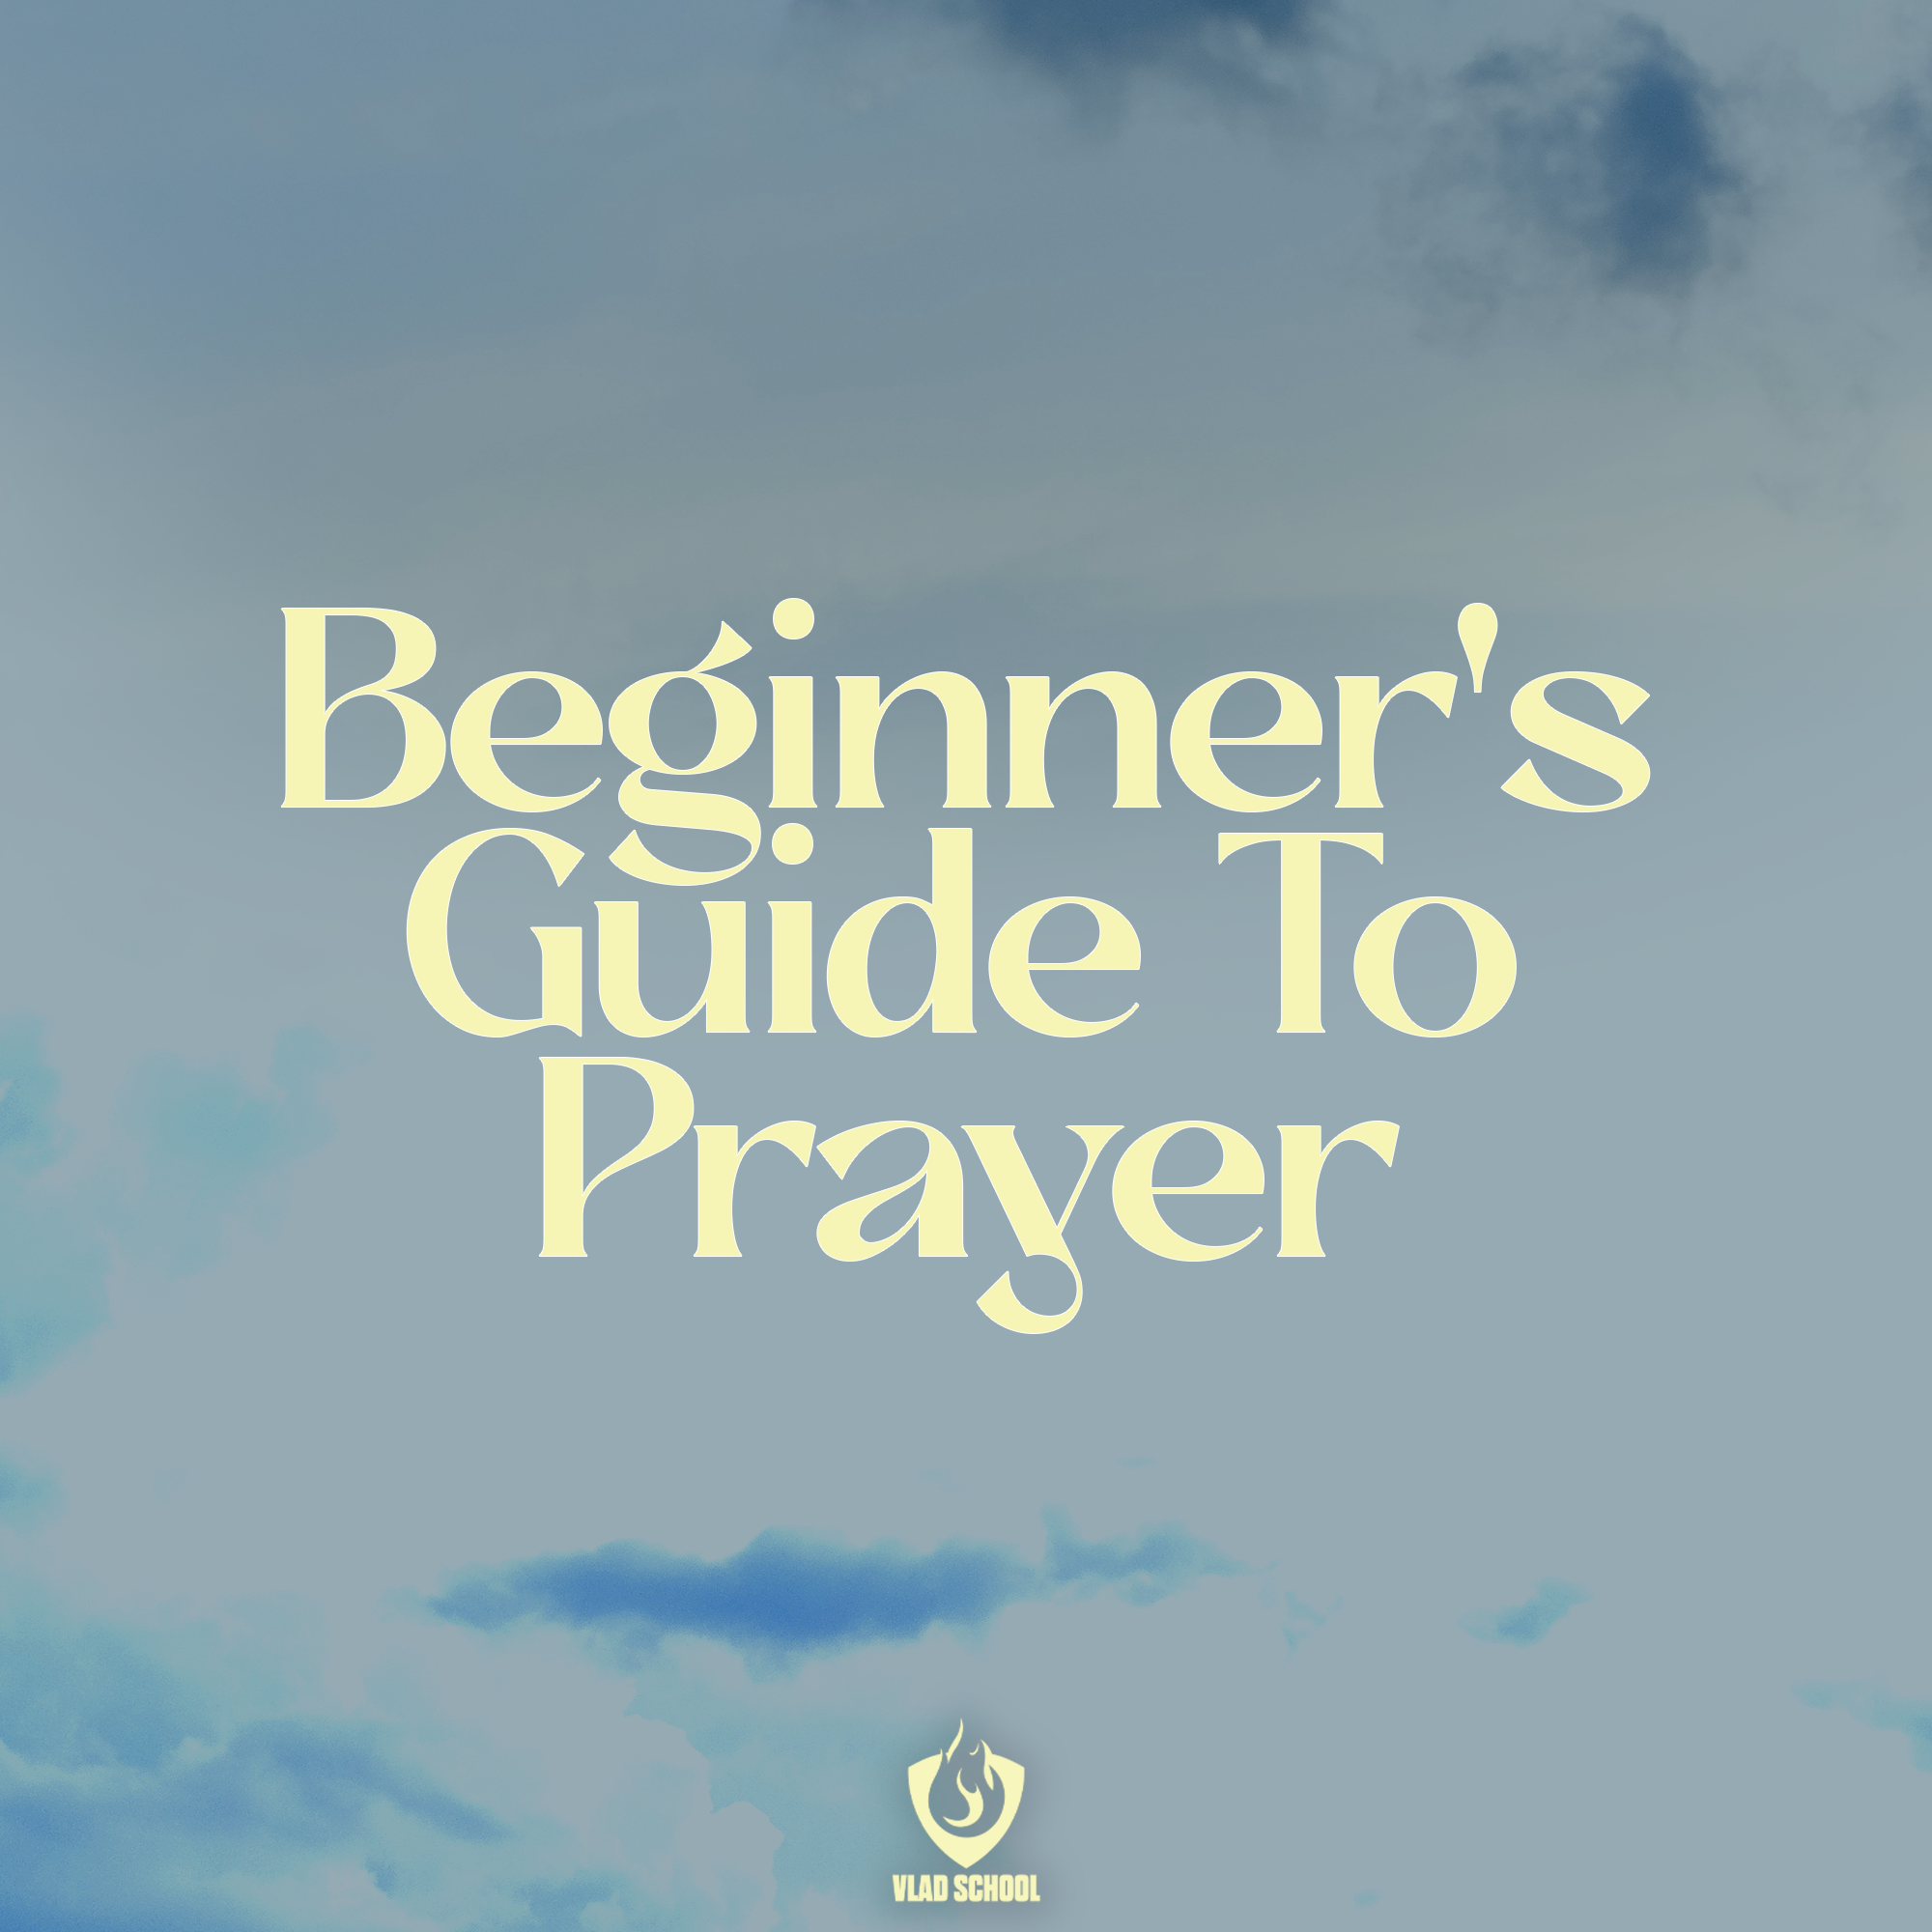 resource - Beginner’s Guide to Prayer